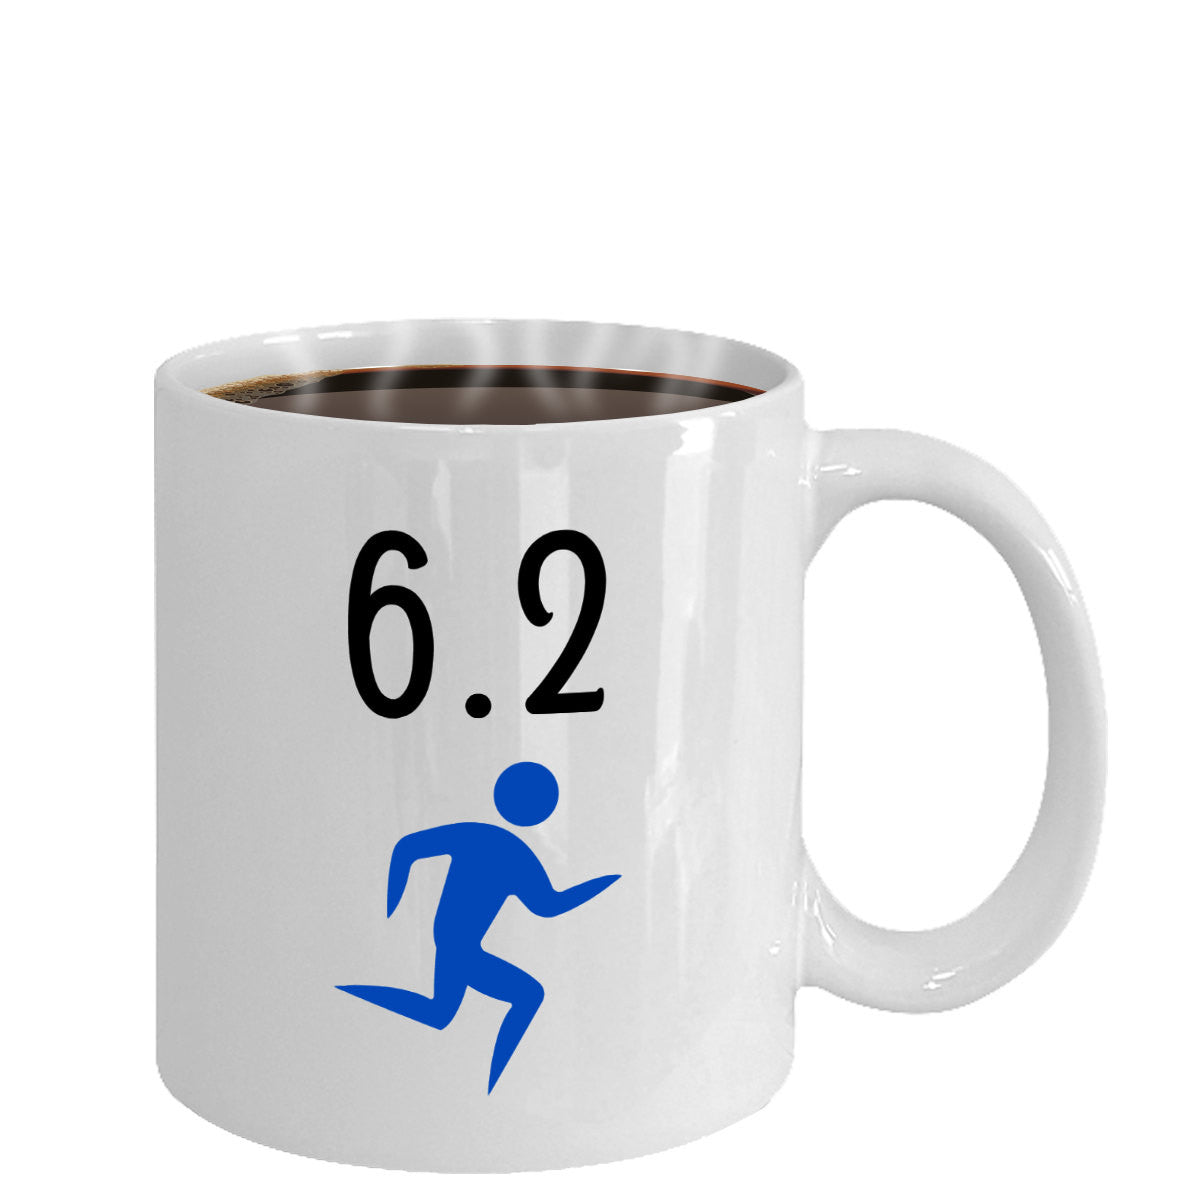 6.2 10K Marathon Runners Novelty Coffee Mug Souvenir Mugs Gifts For Women Men